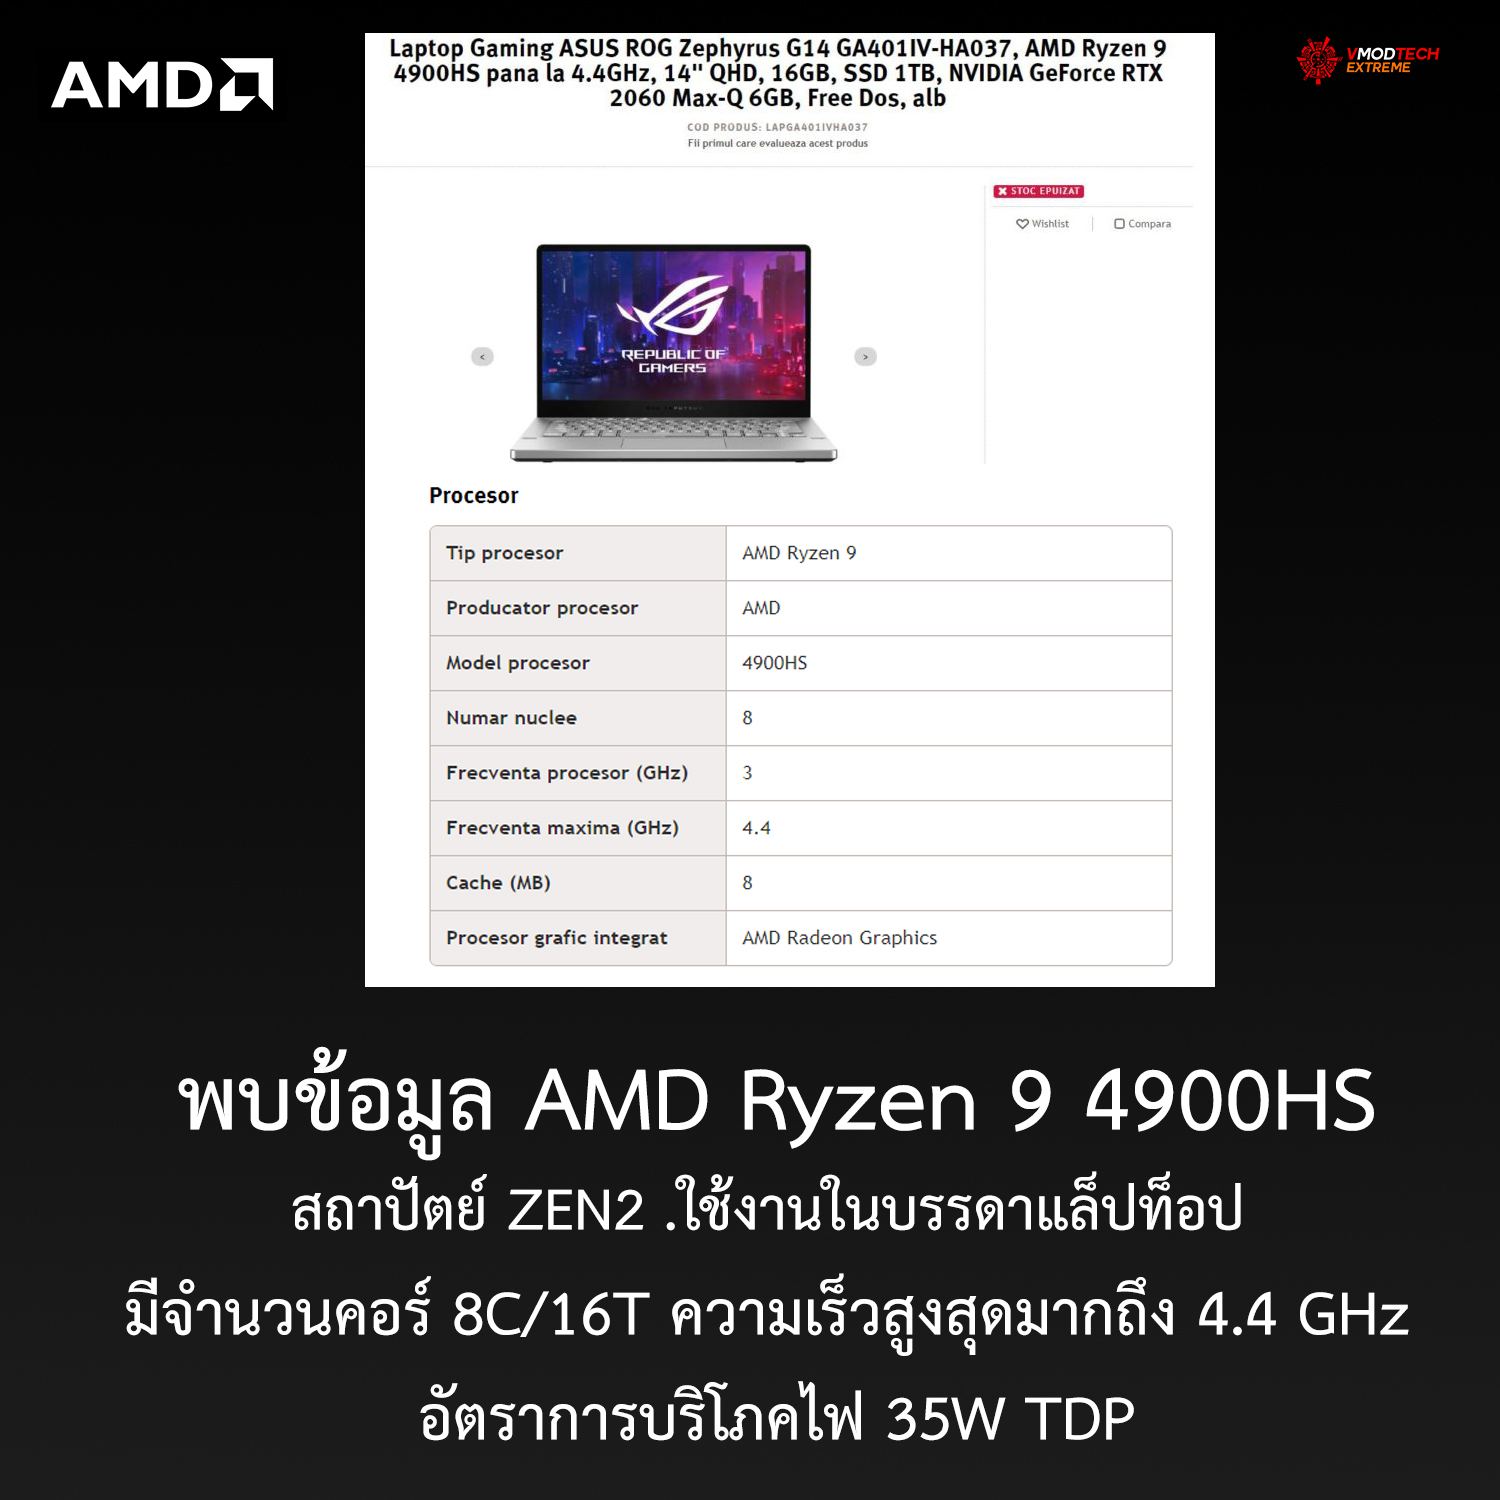 amd ryzen 9 4900hs พบข้อมูล AMD Ryzen 9 4900HS มีจำนวนคอร์ 8C/16T ความเร็วสูงสุดมากถึง 4.4 GHz กันเลยทีเดียว